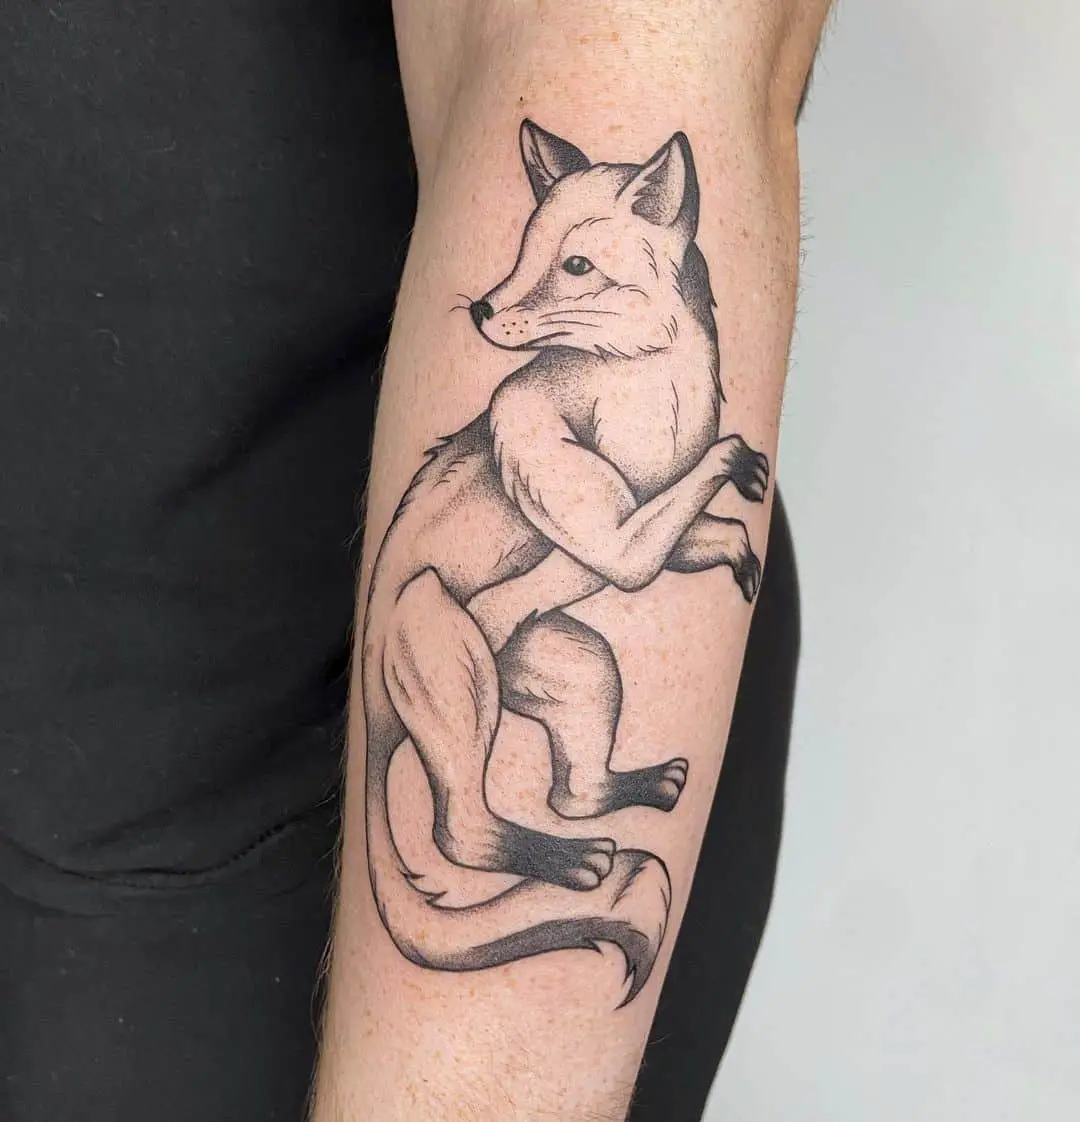 Black and gray fox tattoo on lower arm by jenna.boleyn